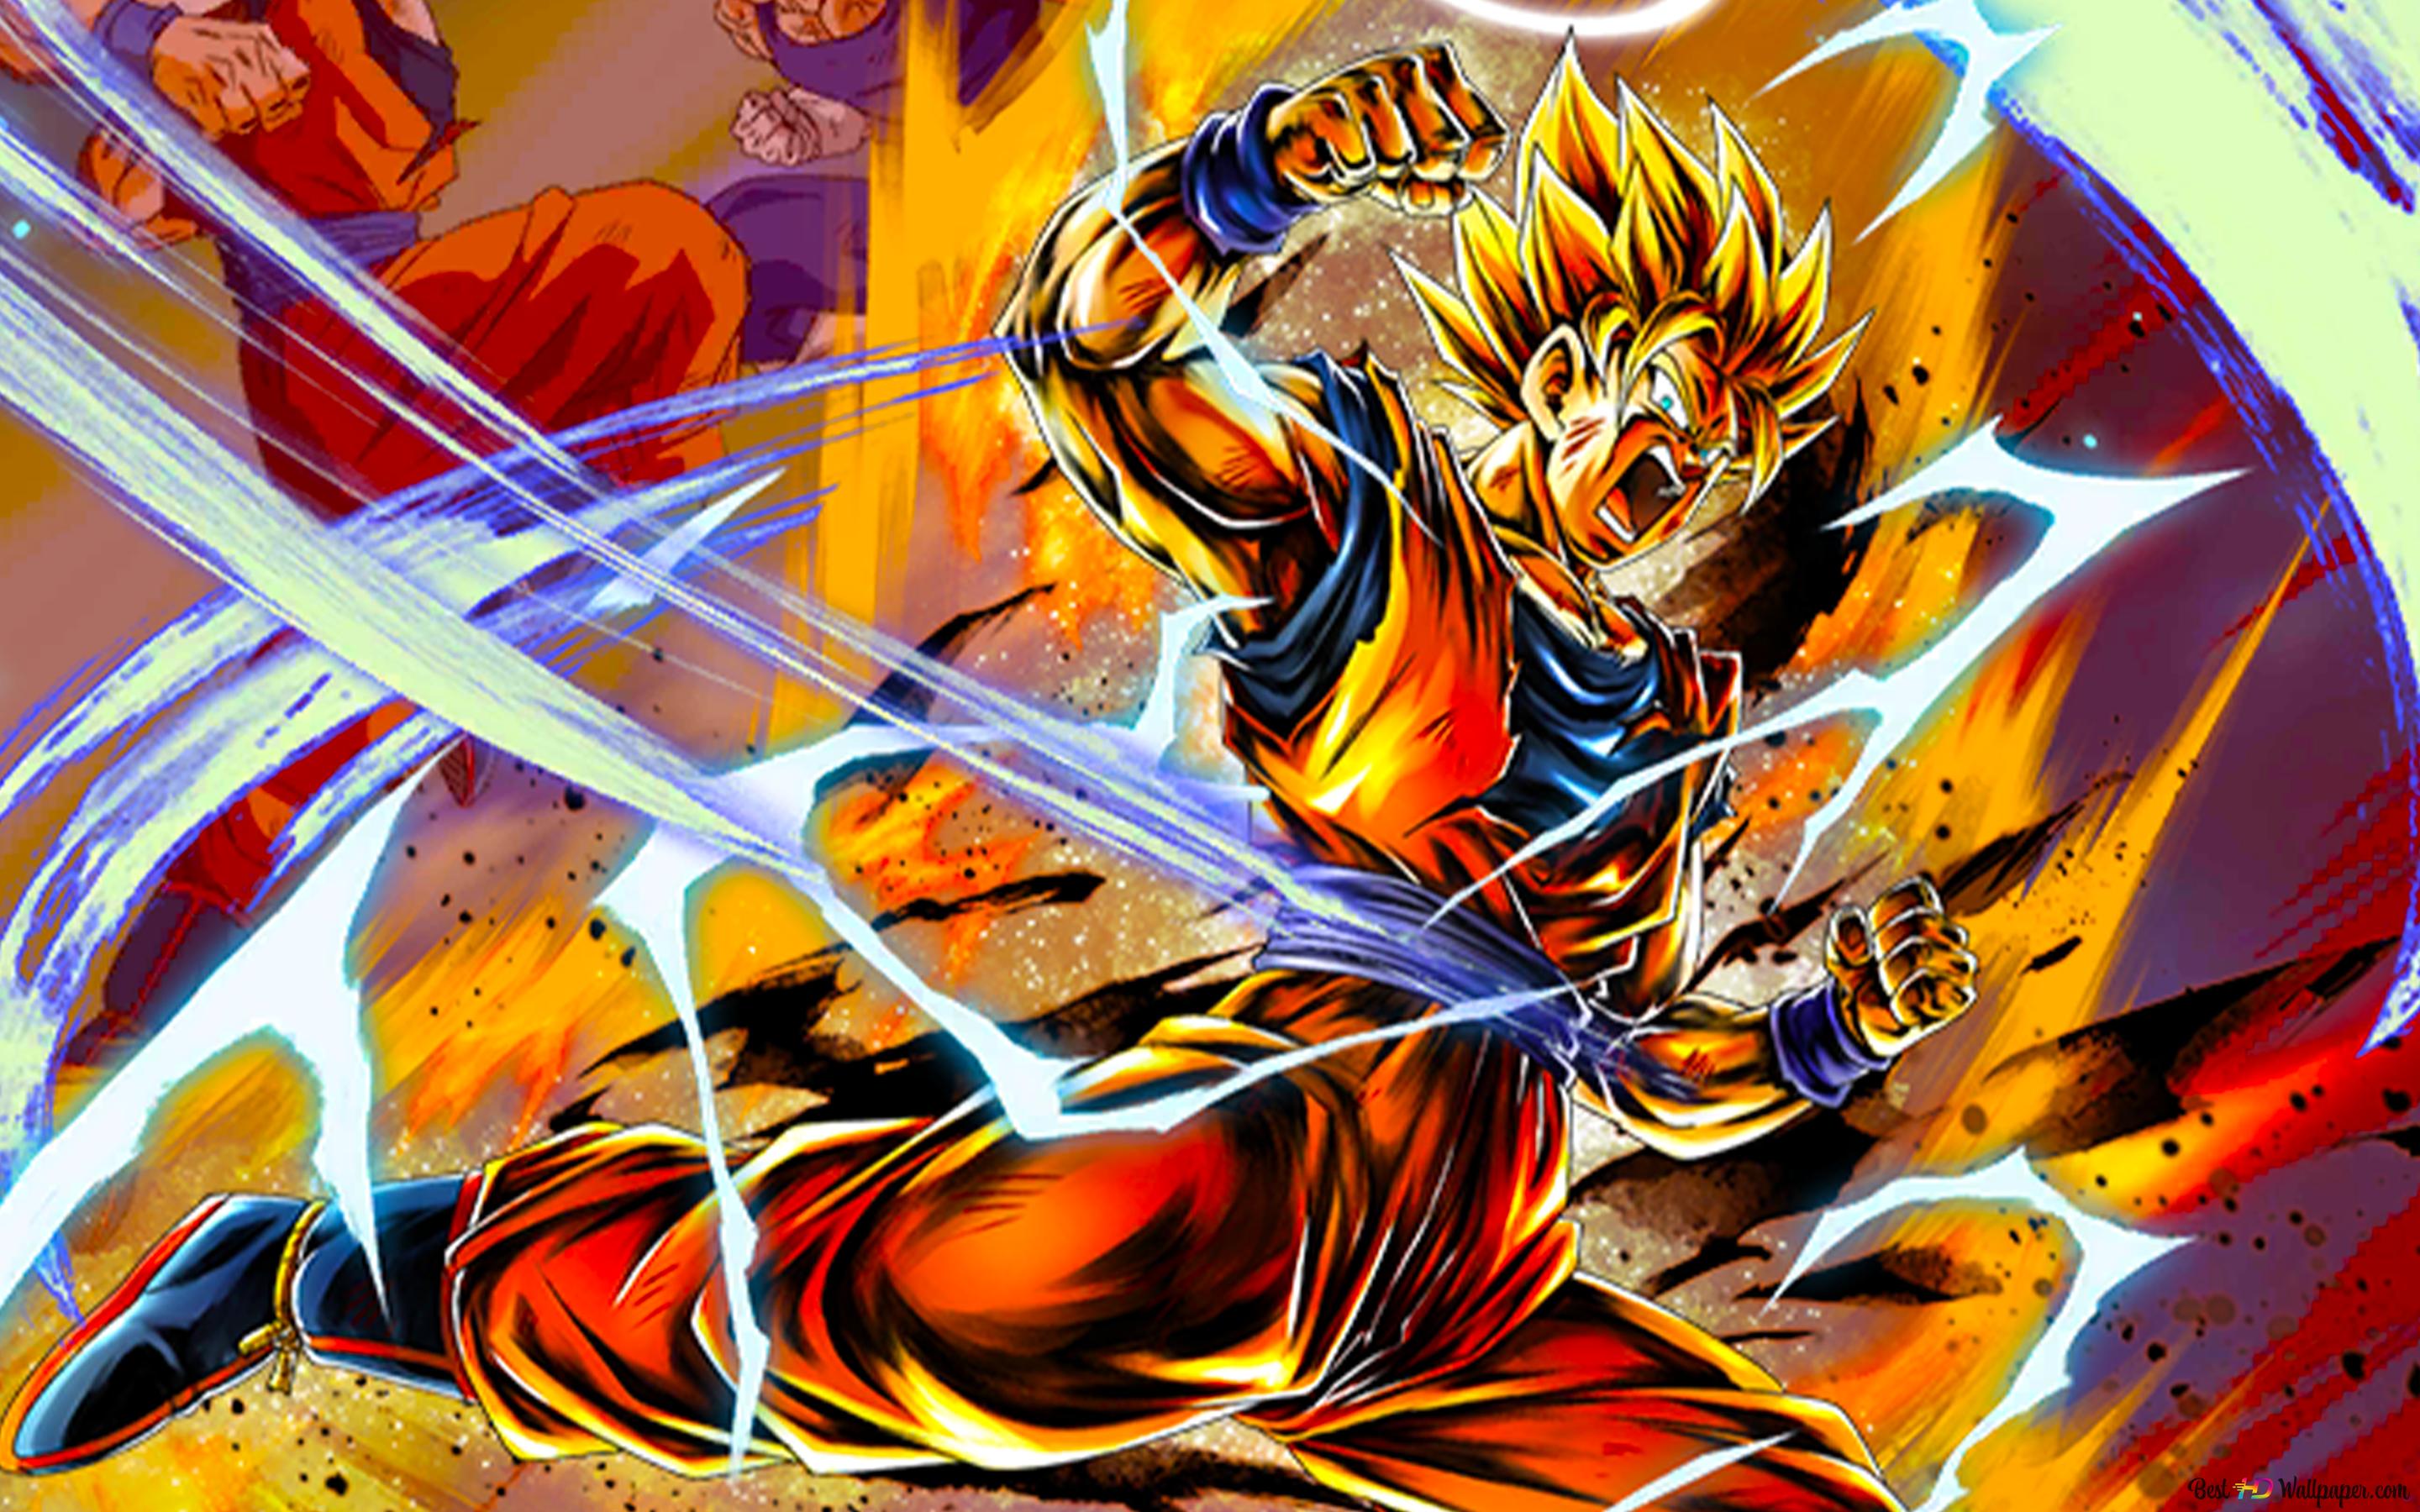 Super Saiyan 2 Goku vs. (Majin Vegeta) from Dragon Ball Z [Dragon Ball Legends Arts] for DeskK wallpaper download